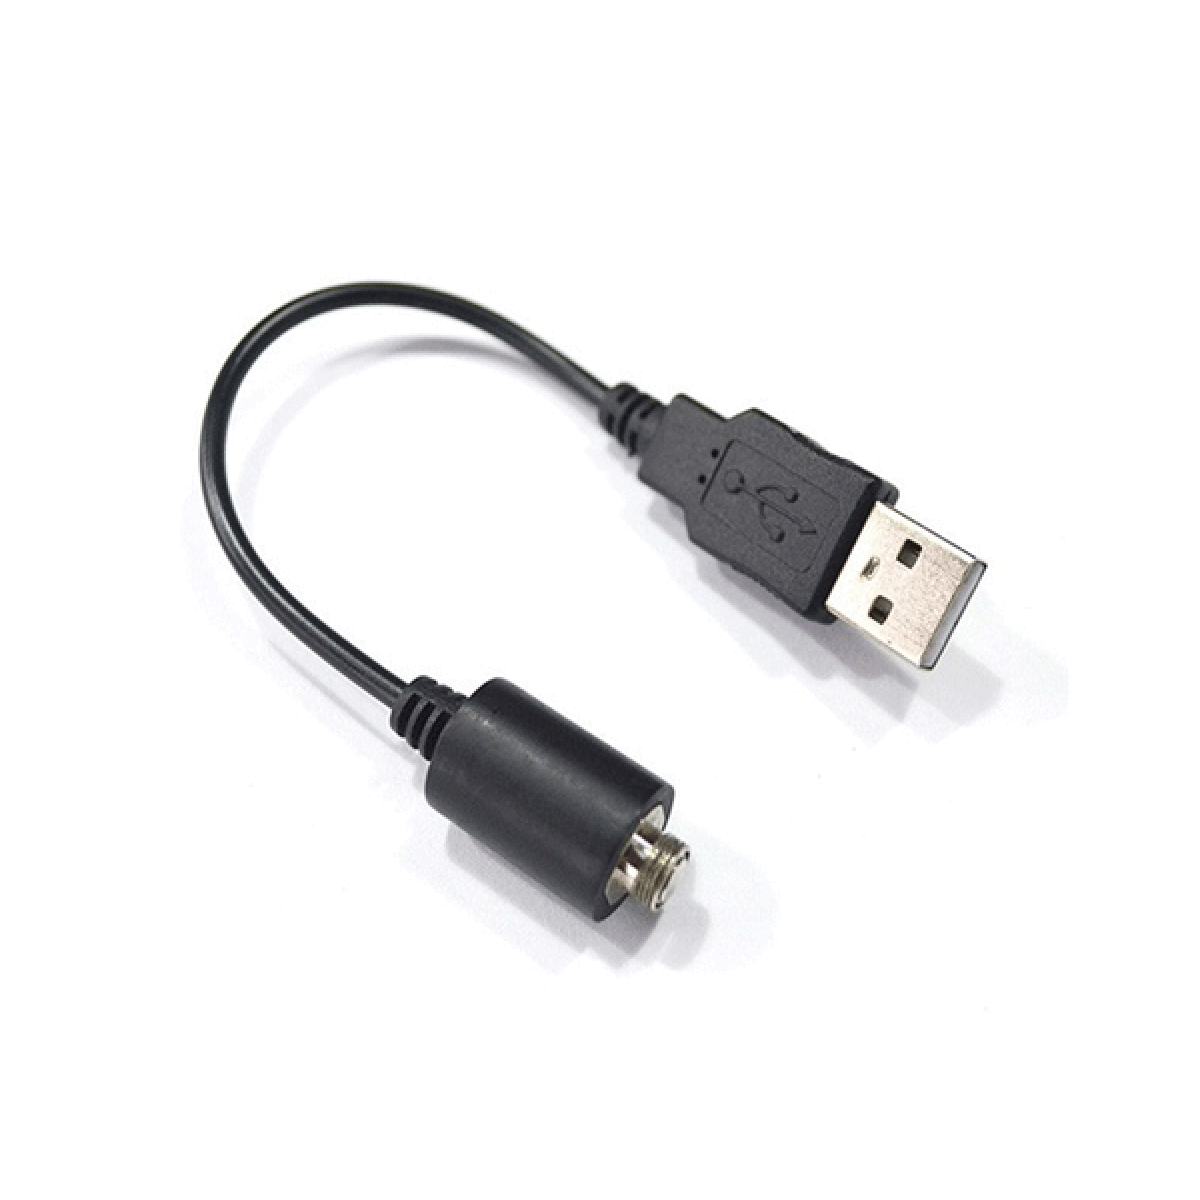 ASPIRE USB CHARGER - Ace Vape